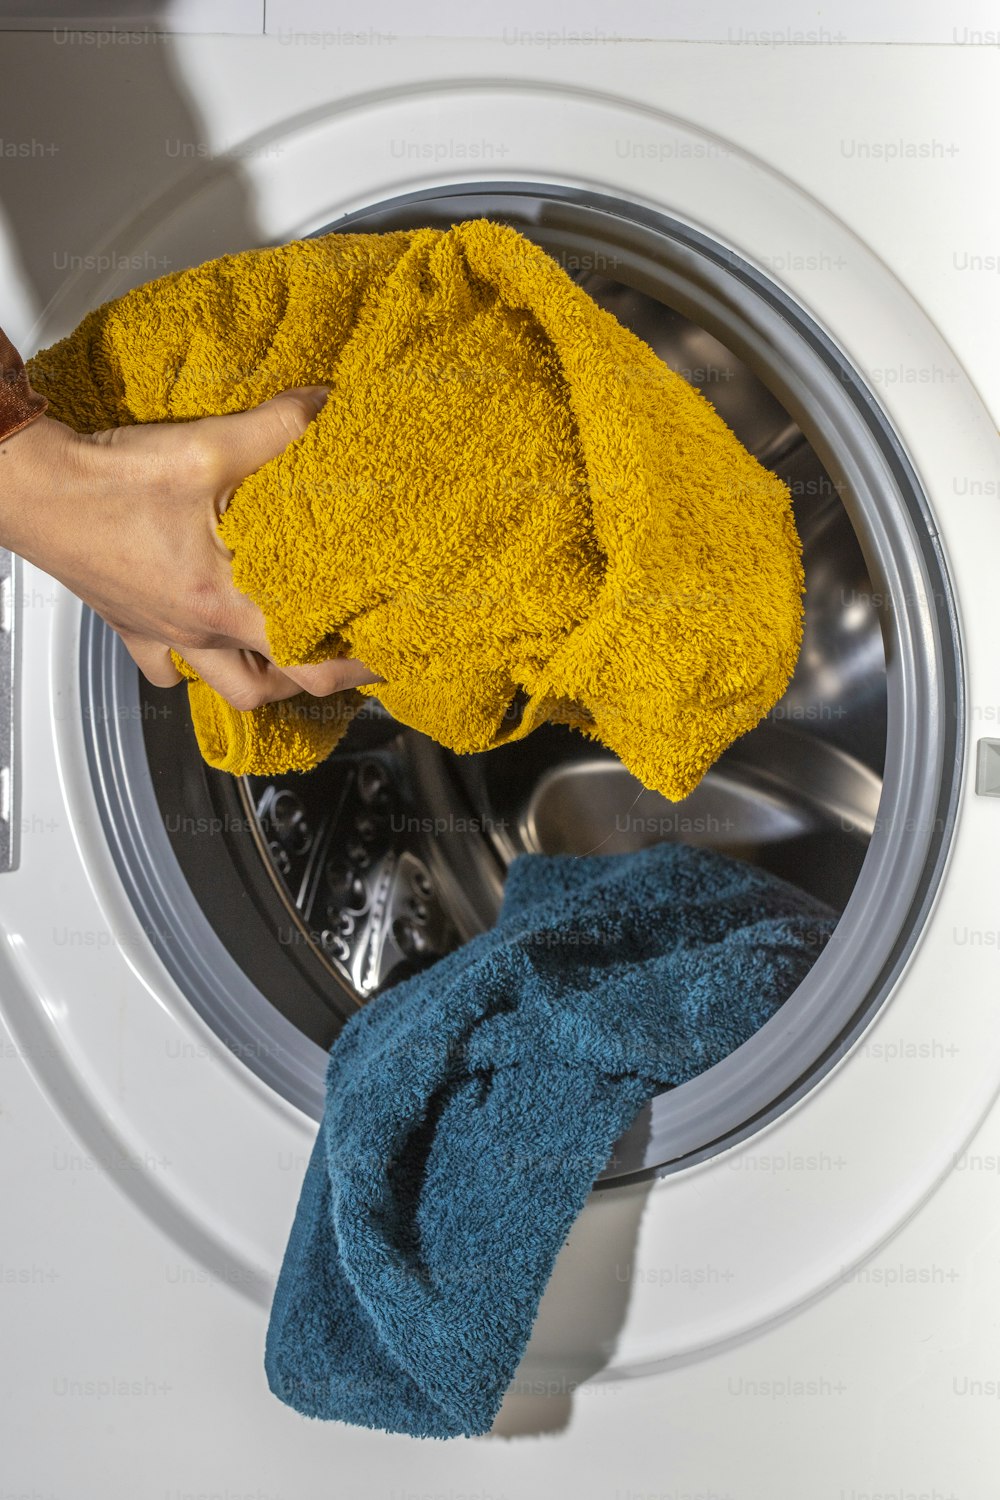 una persona sosteniendo una toalla amarilla junto a una lavadora